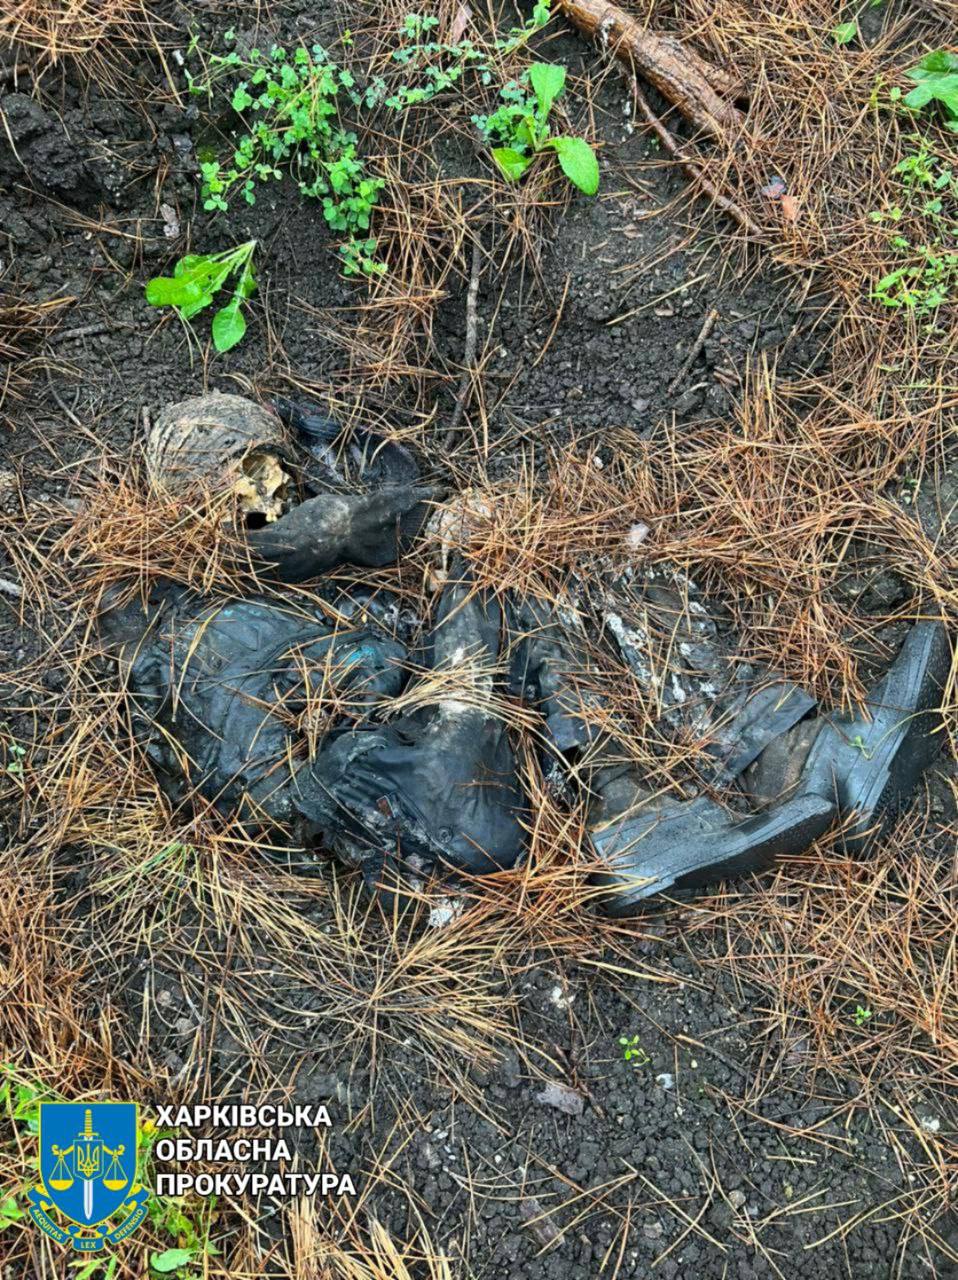 Замучили до смерти: на Харьковщине нашли еще одну жертву оккупантов